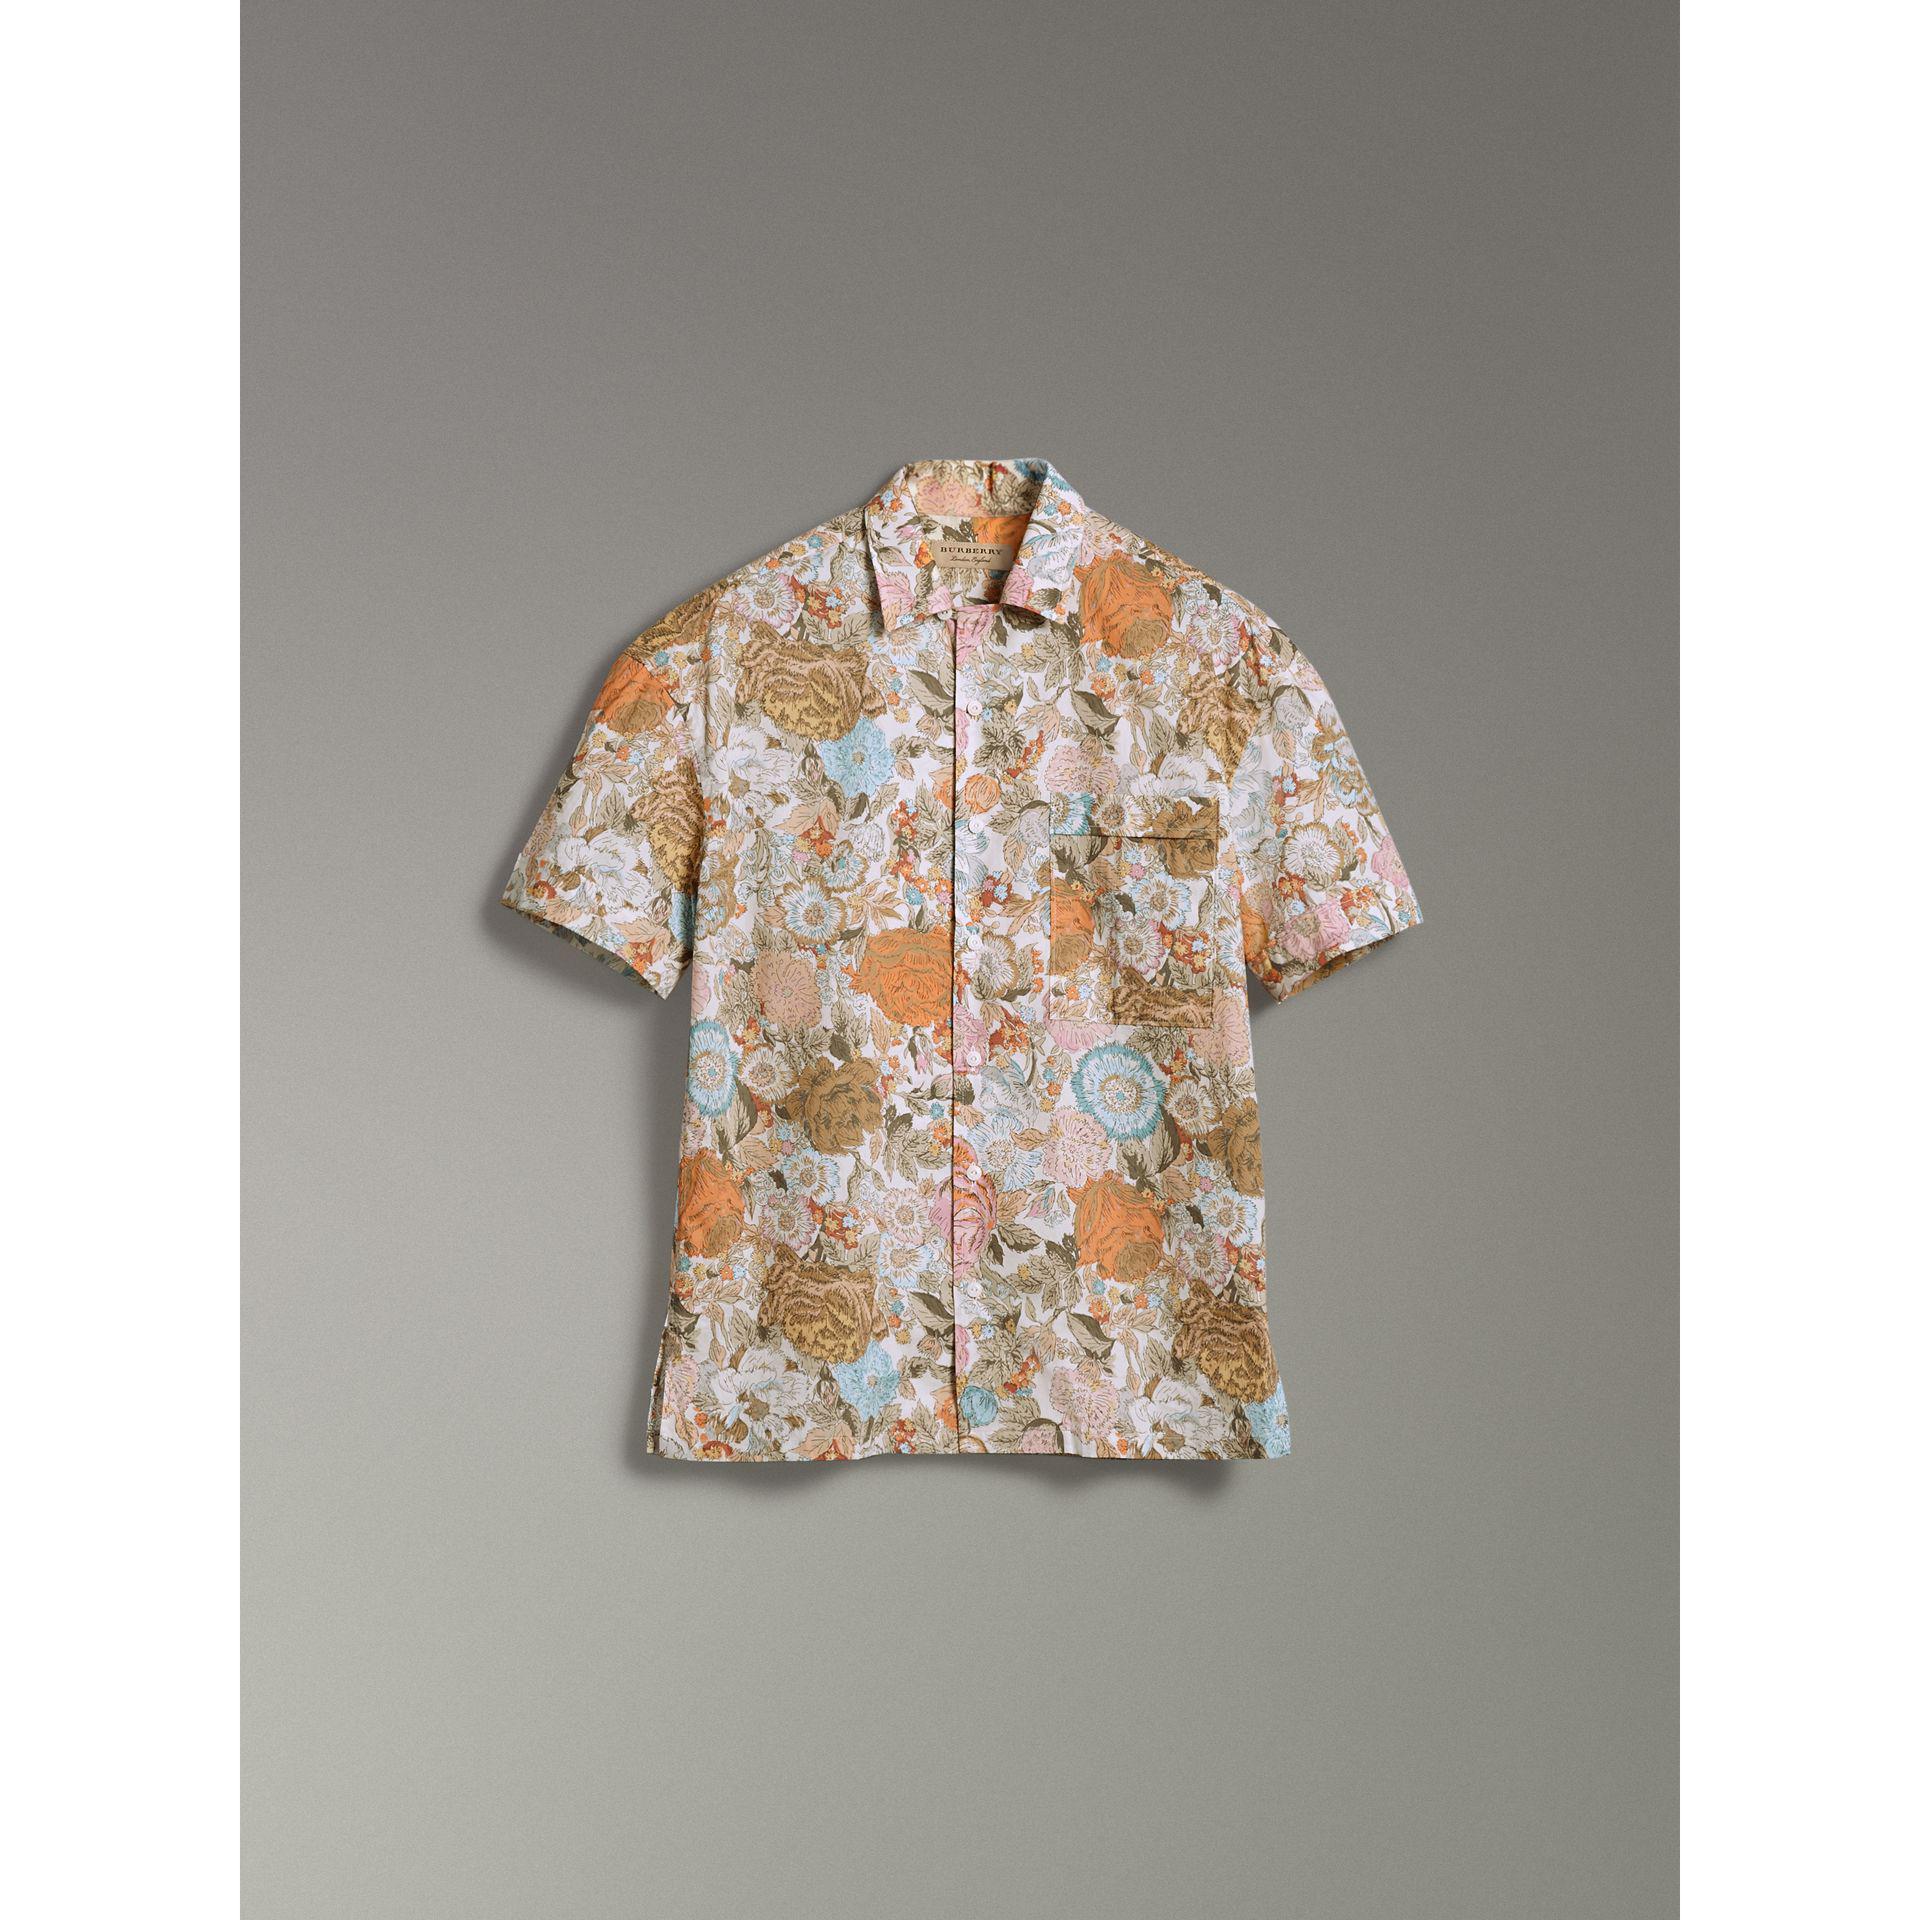 Burberry Floral print hoodie, Men's Clothing